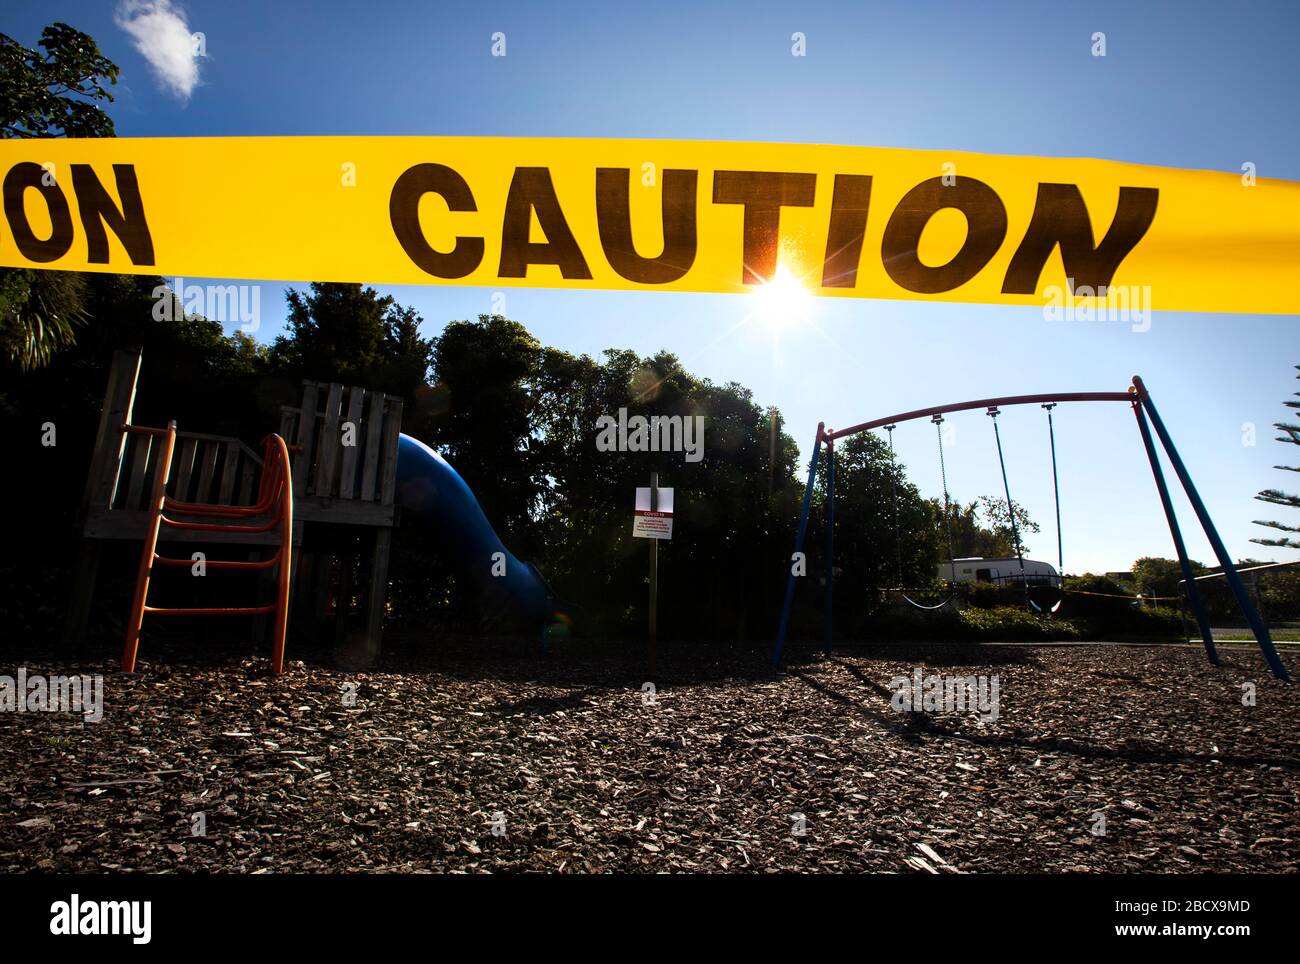 Schilder auf dem geschlossenen Spielplatz wegen Covid 19 Virusabsperrung, Nelson, Neuseeland Stockfoto